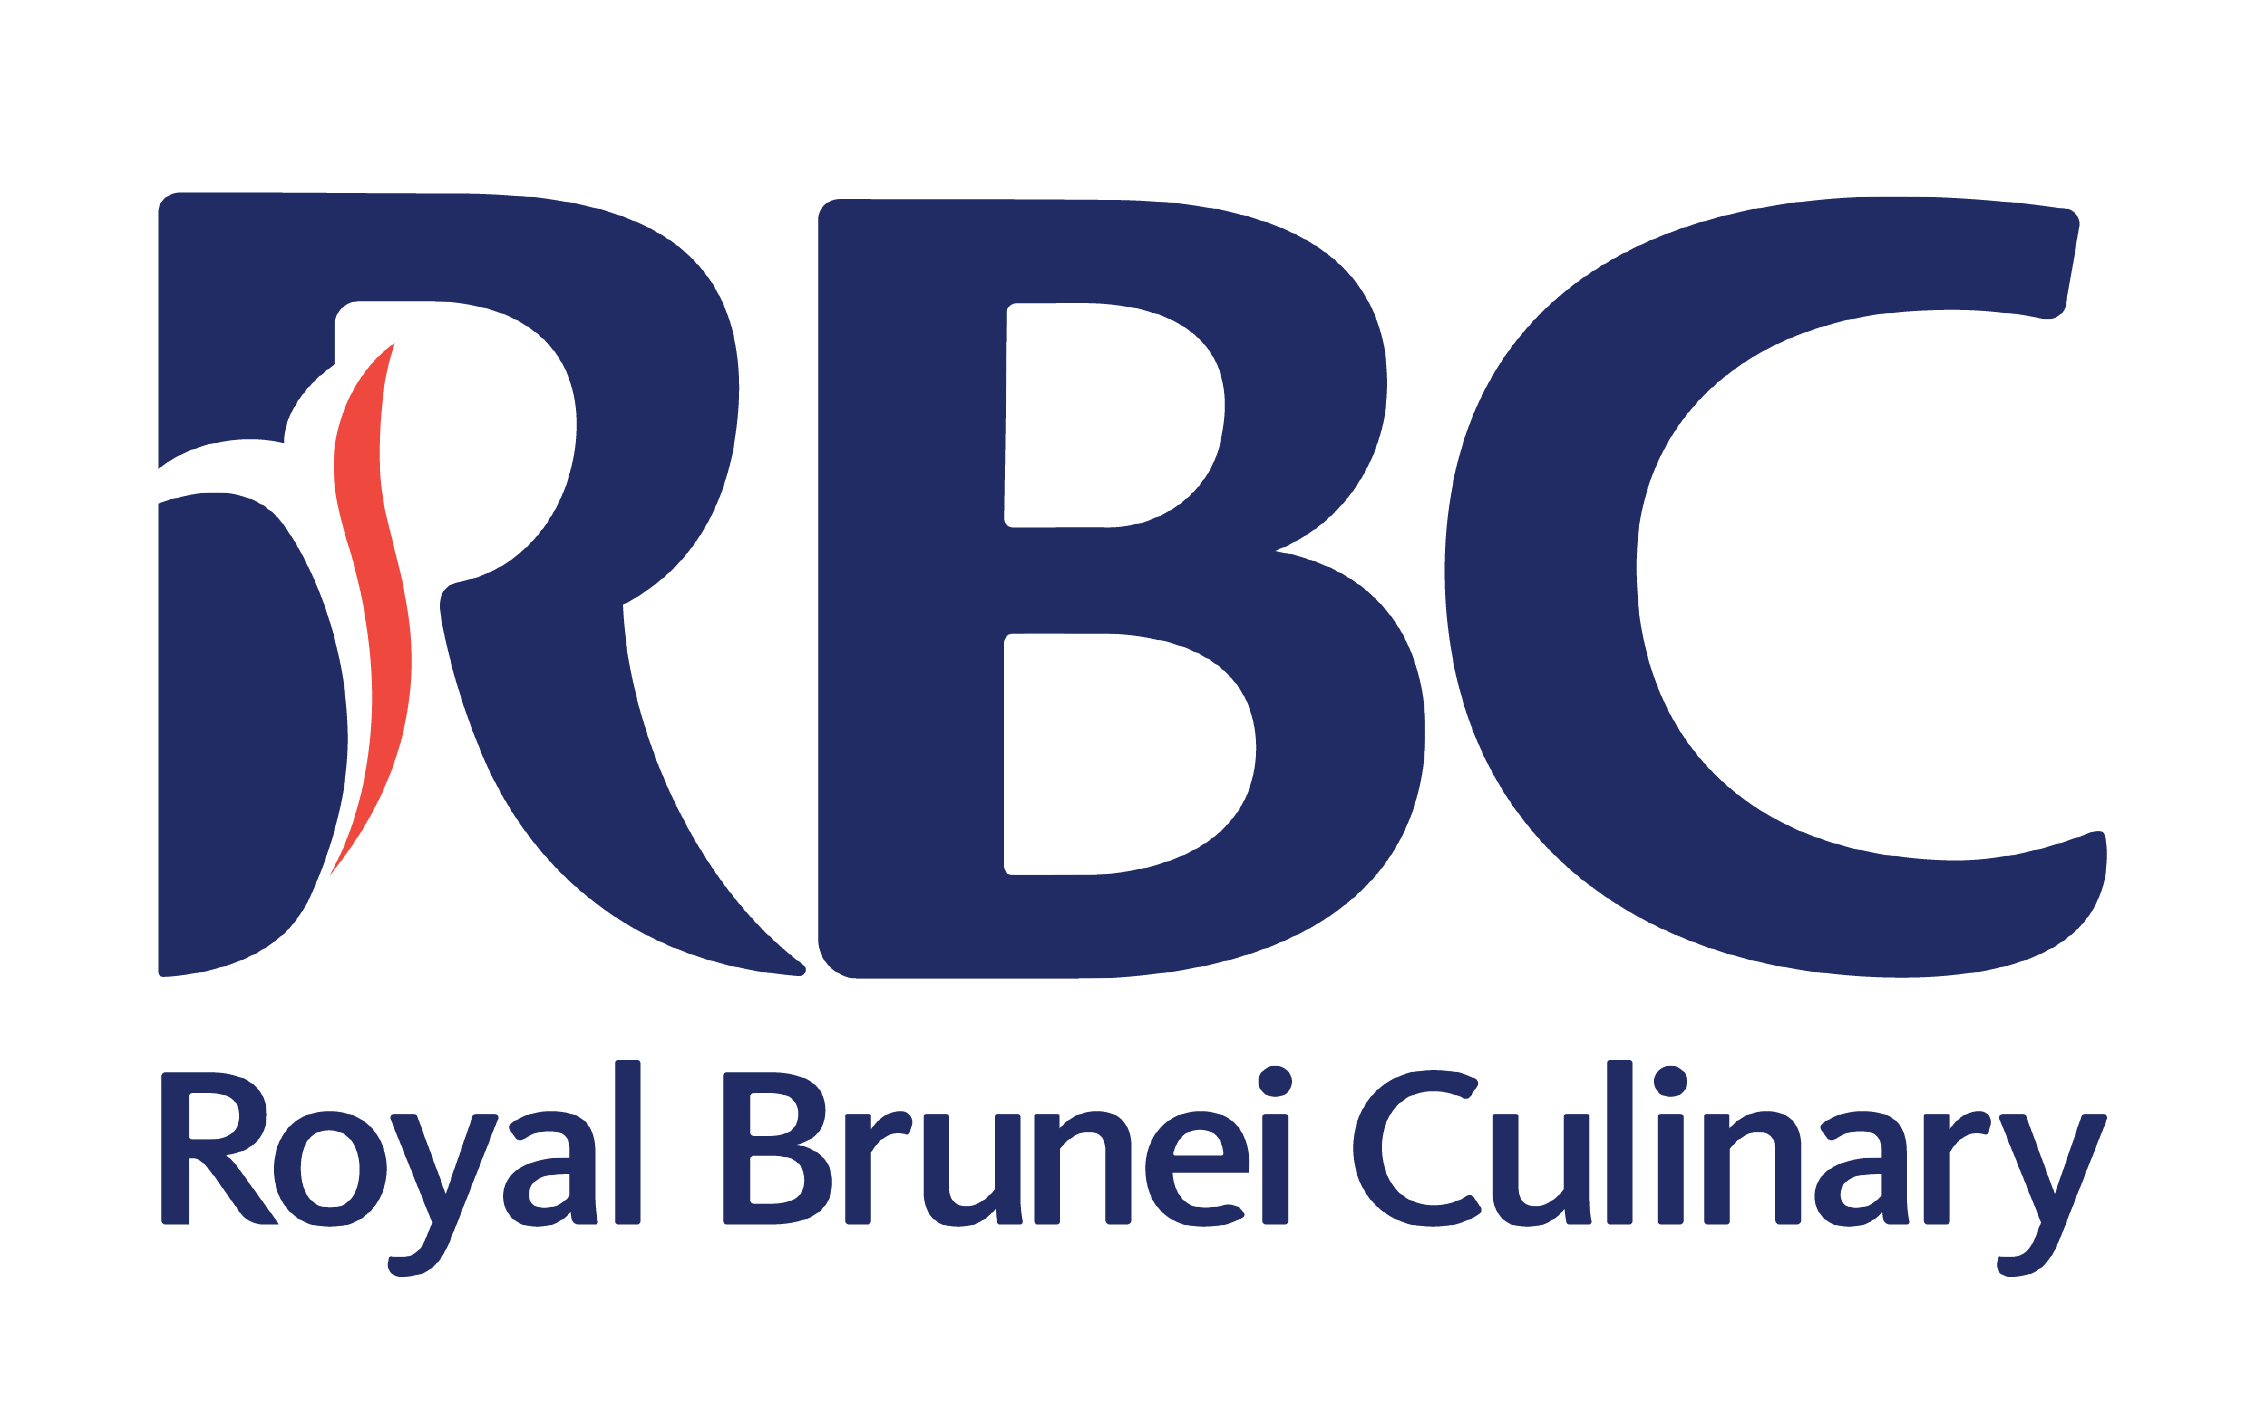 Royal Brunei Culinary